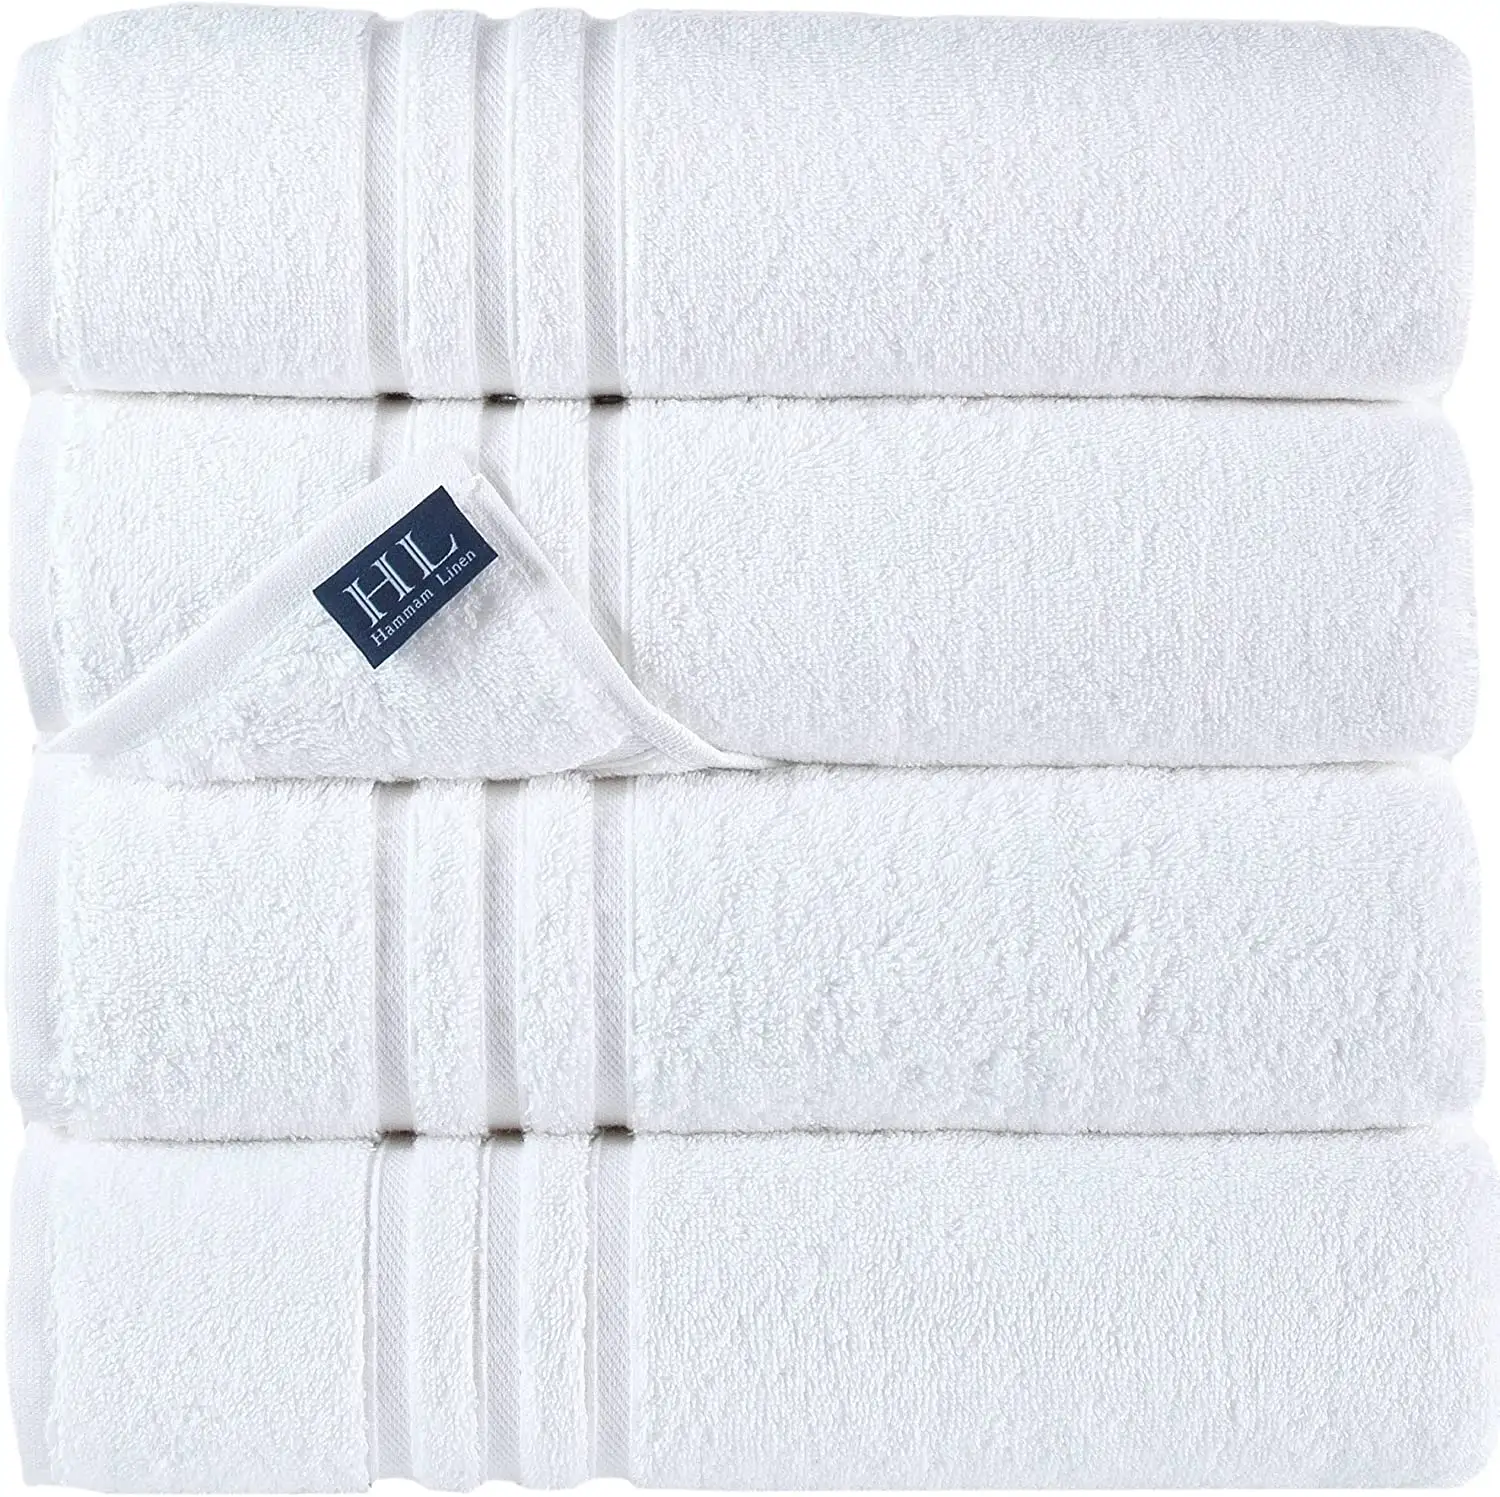 Luxury 350g-500g White Bath Towel Extra Large 5 Star 100% Cotton Hotel Bath to set